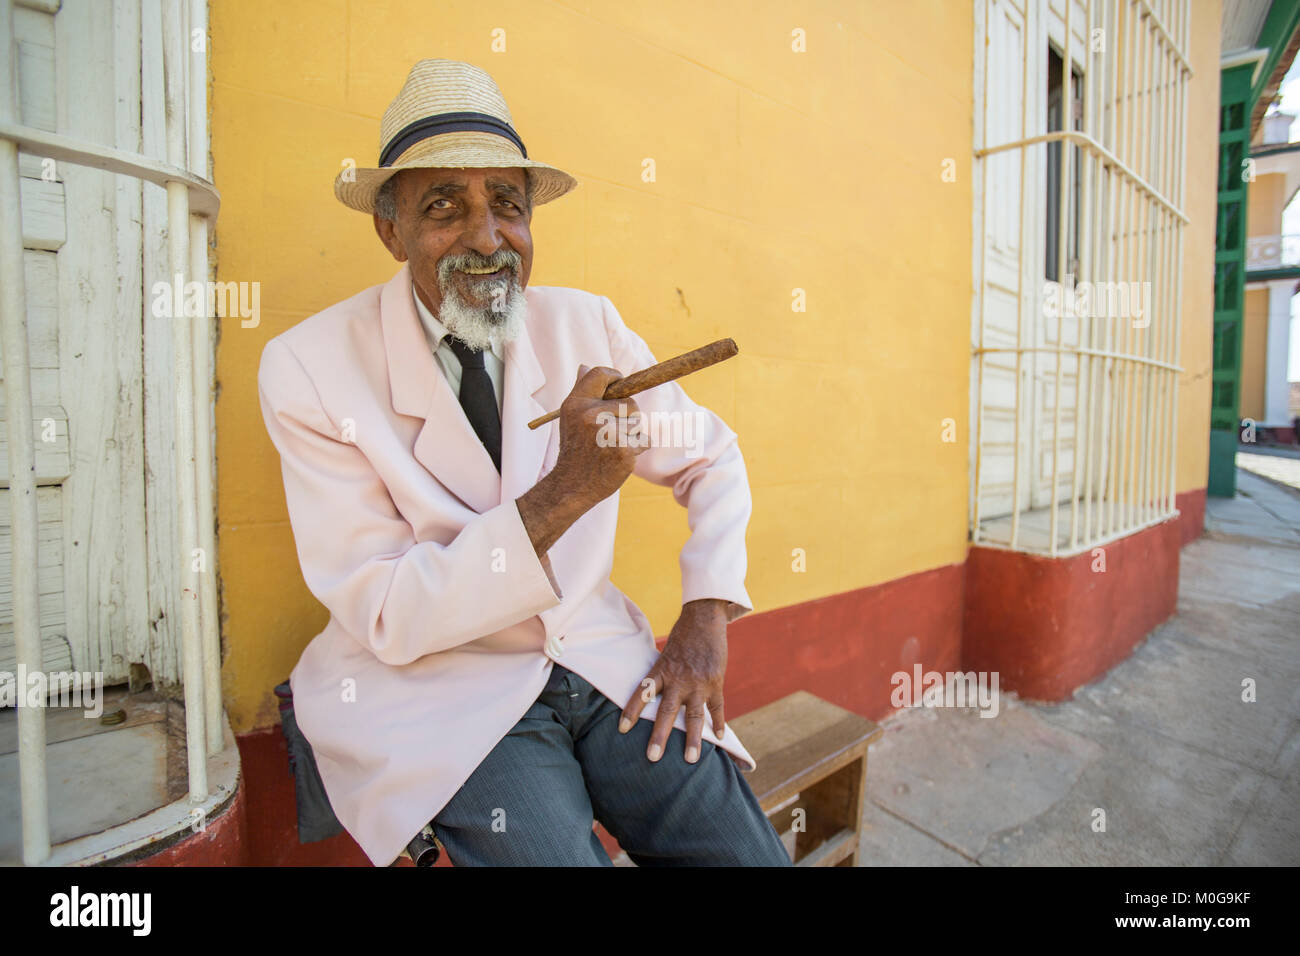 Trinidad man in Fedora hat, Cuba Stock Photo - Alamy